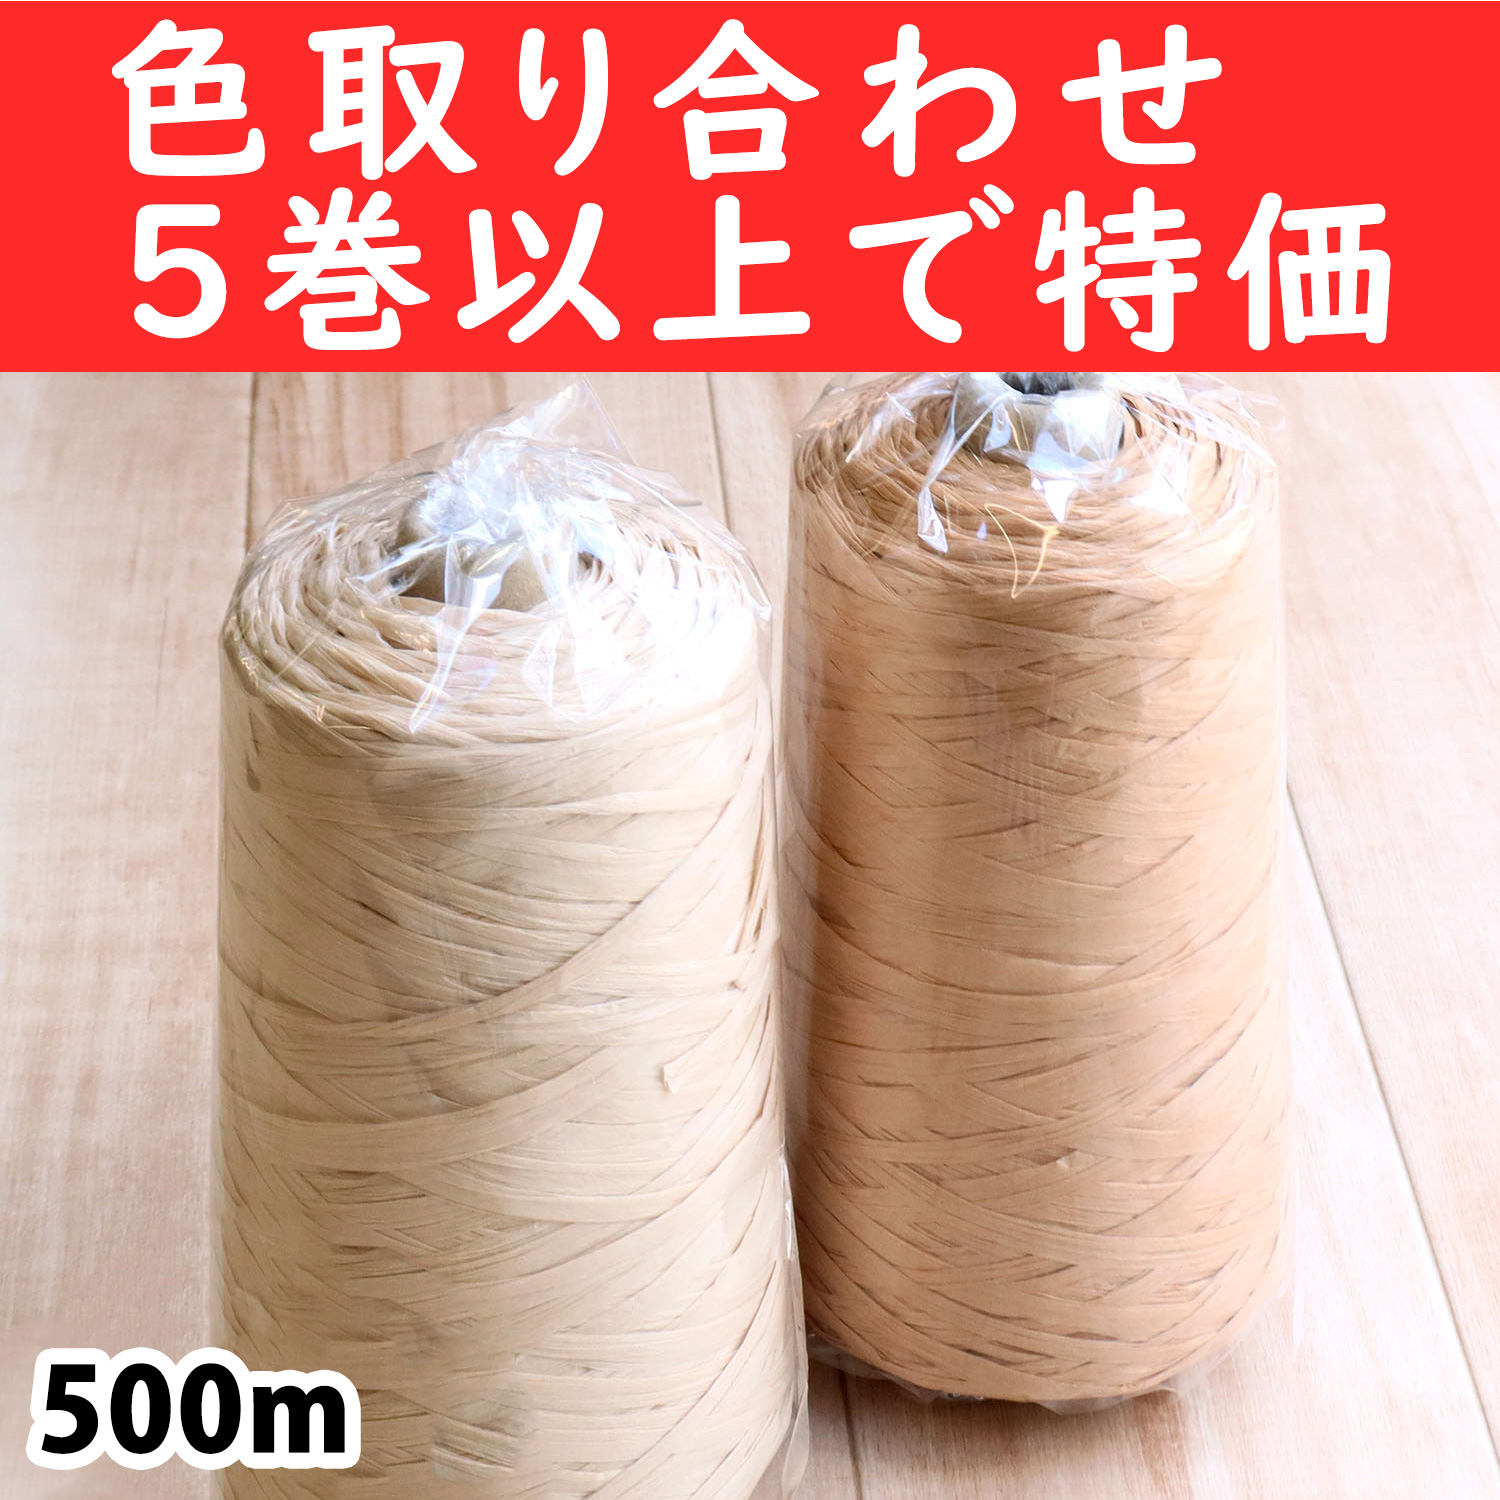 MHY500-OVER5 Manila Hemp Yarn, Length 500m, 5 roll or more (roll)